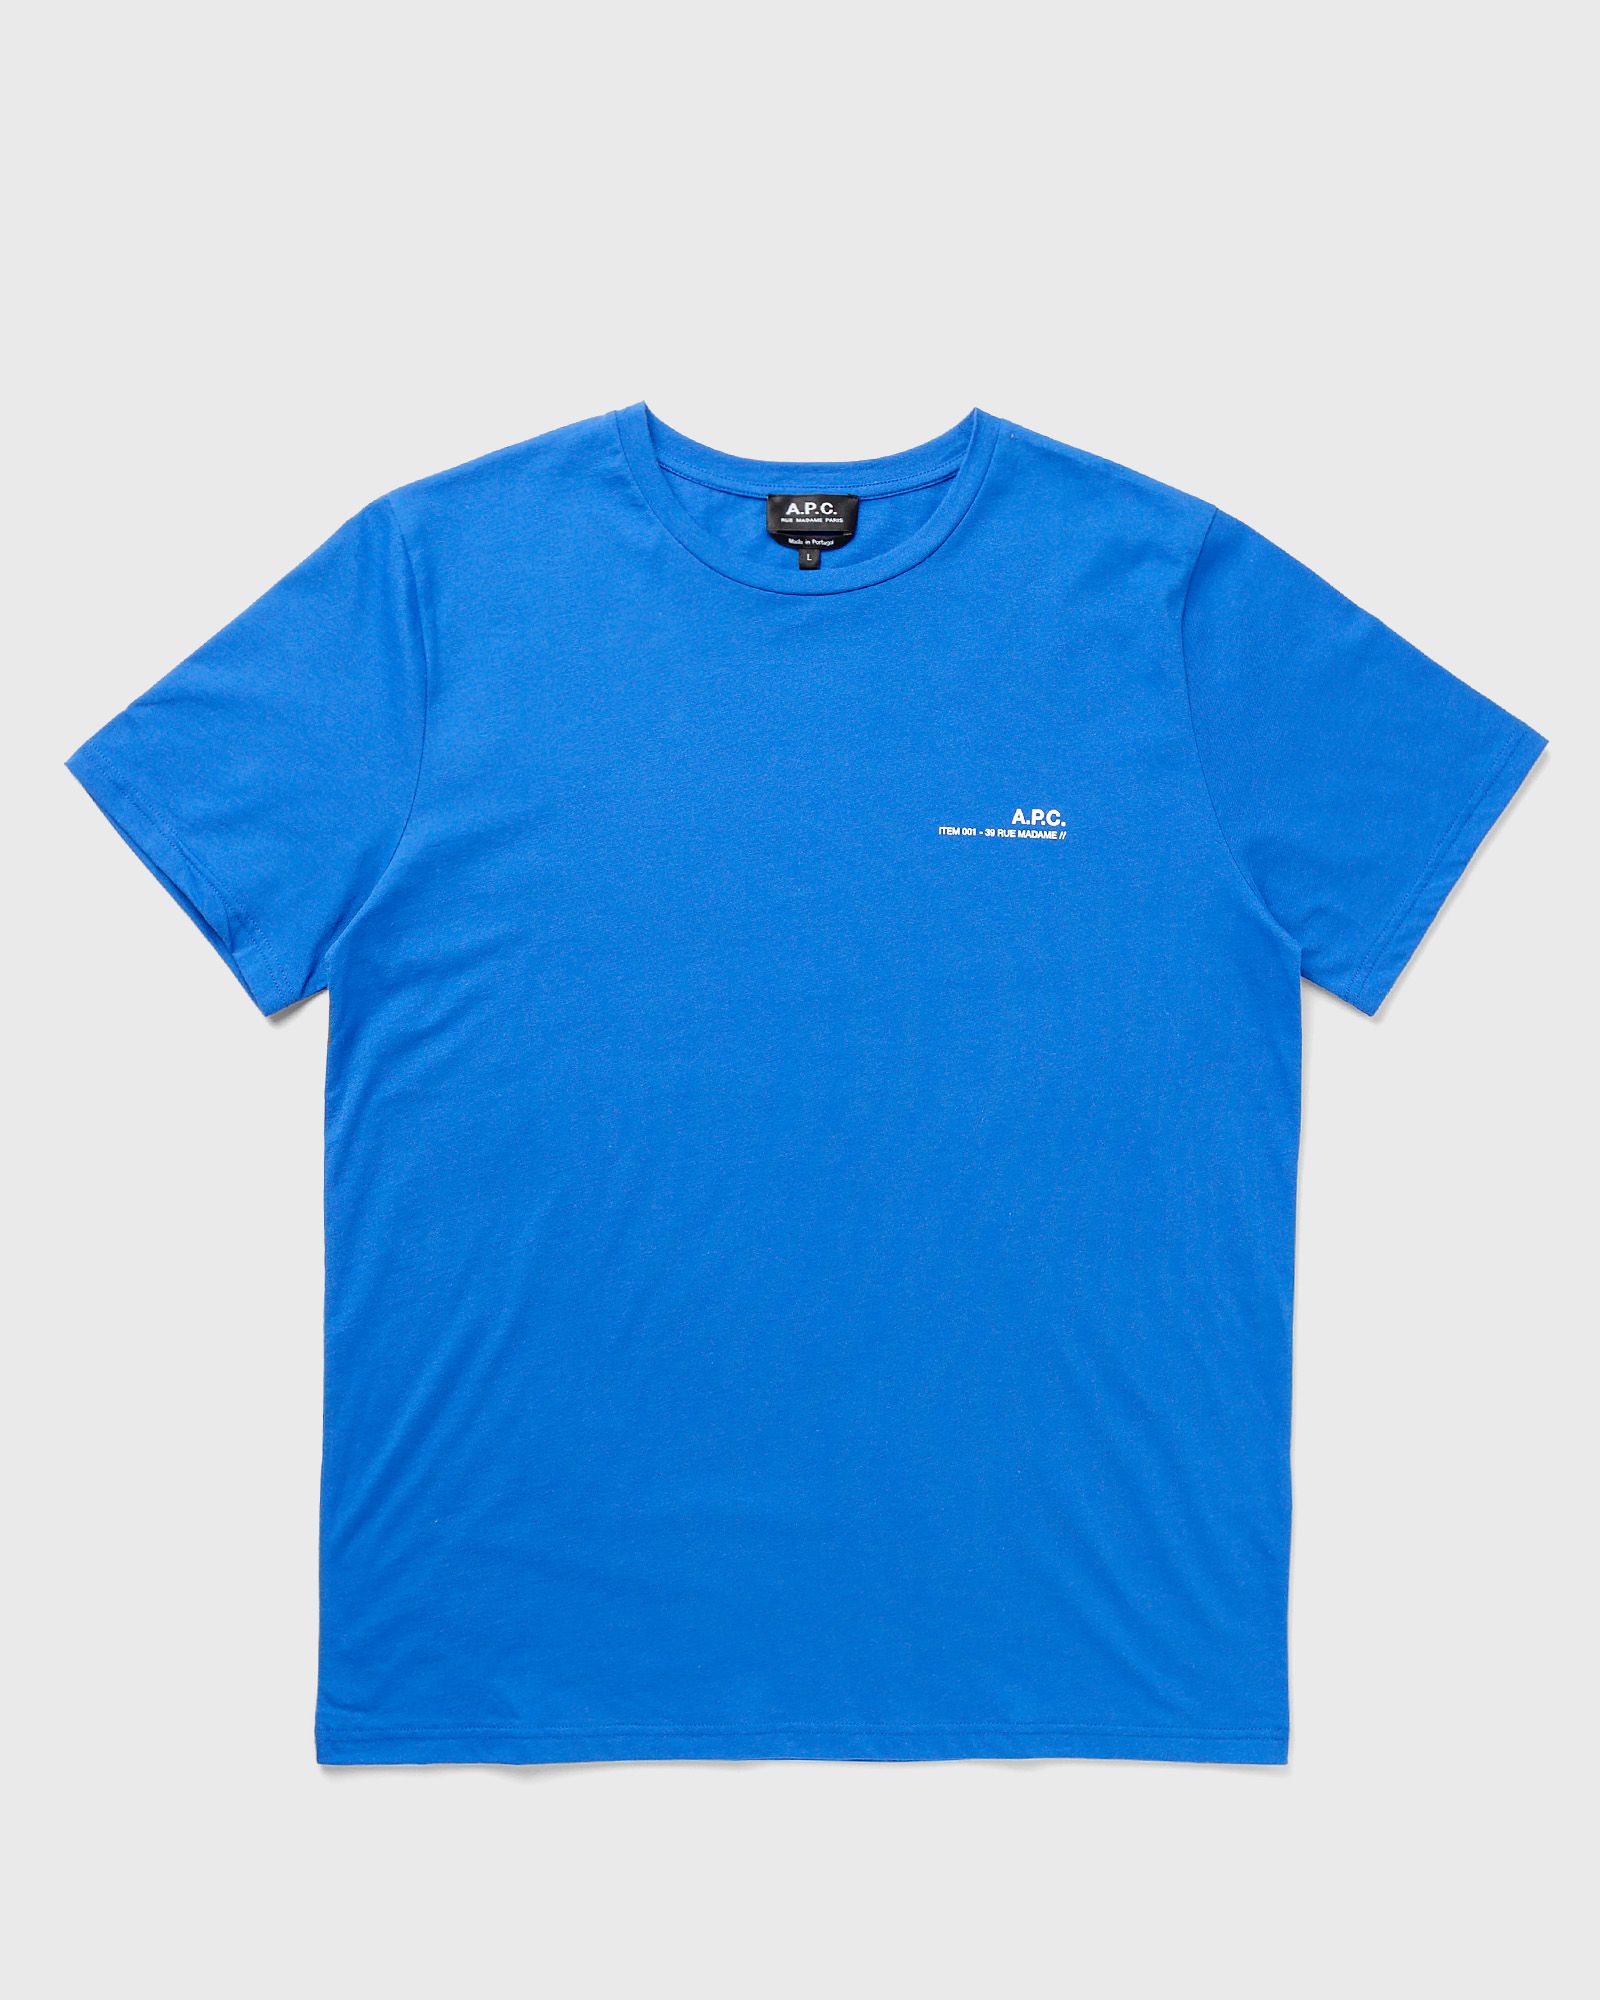 A.P.C. - t-shirt item men shortsleeves blue in größe:l